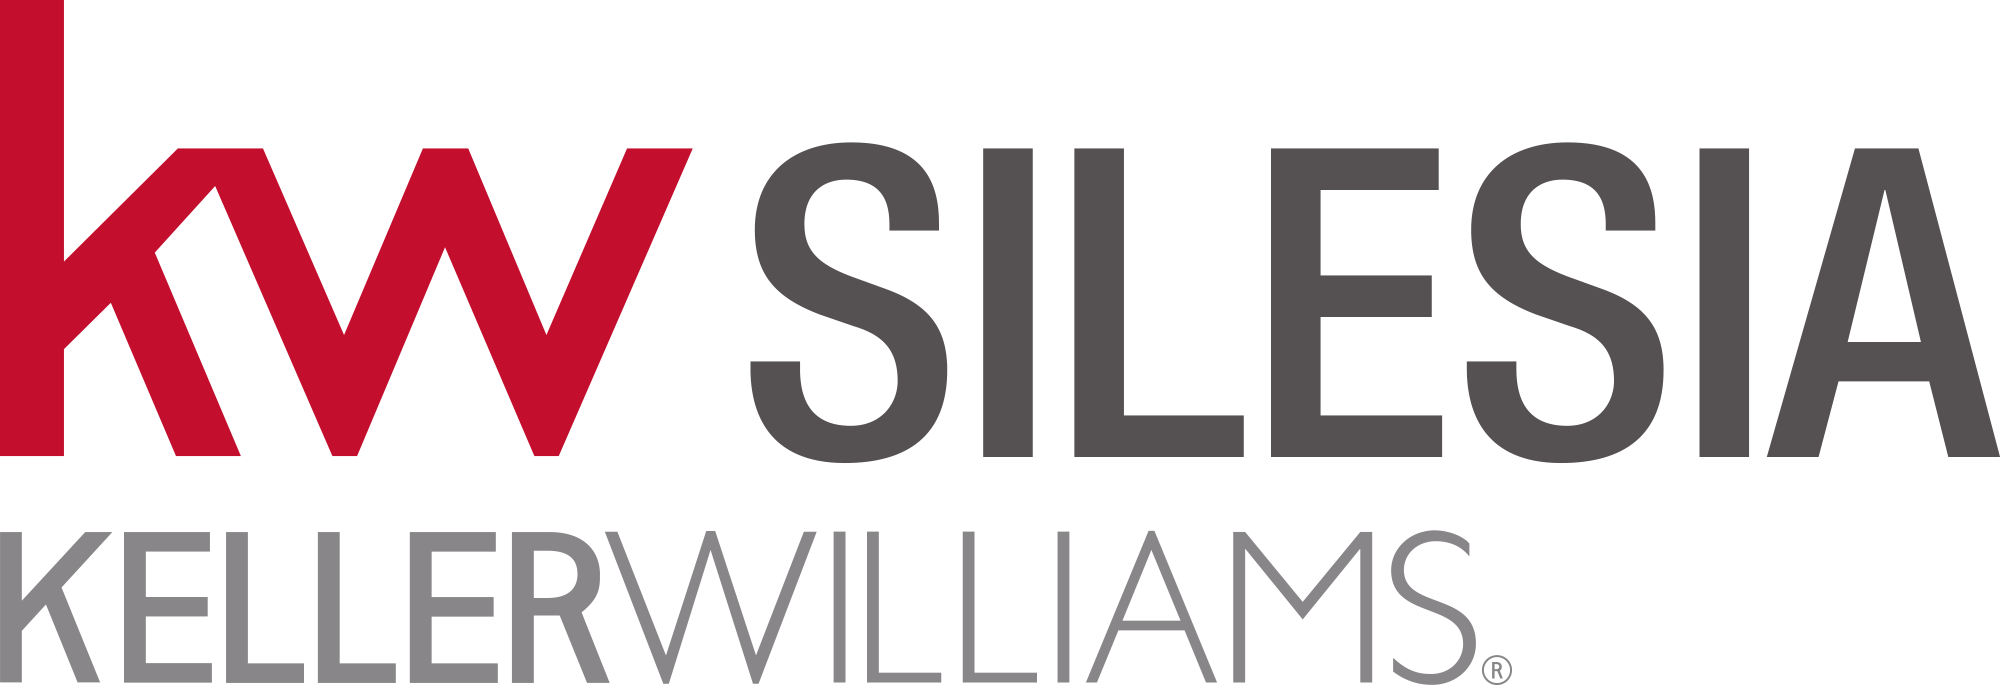 Keller Williams Silesia